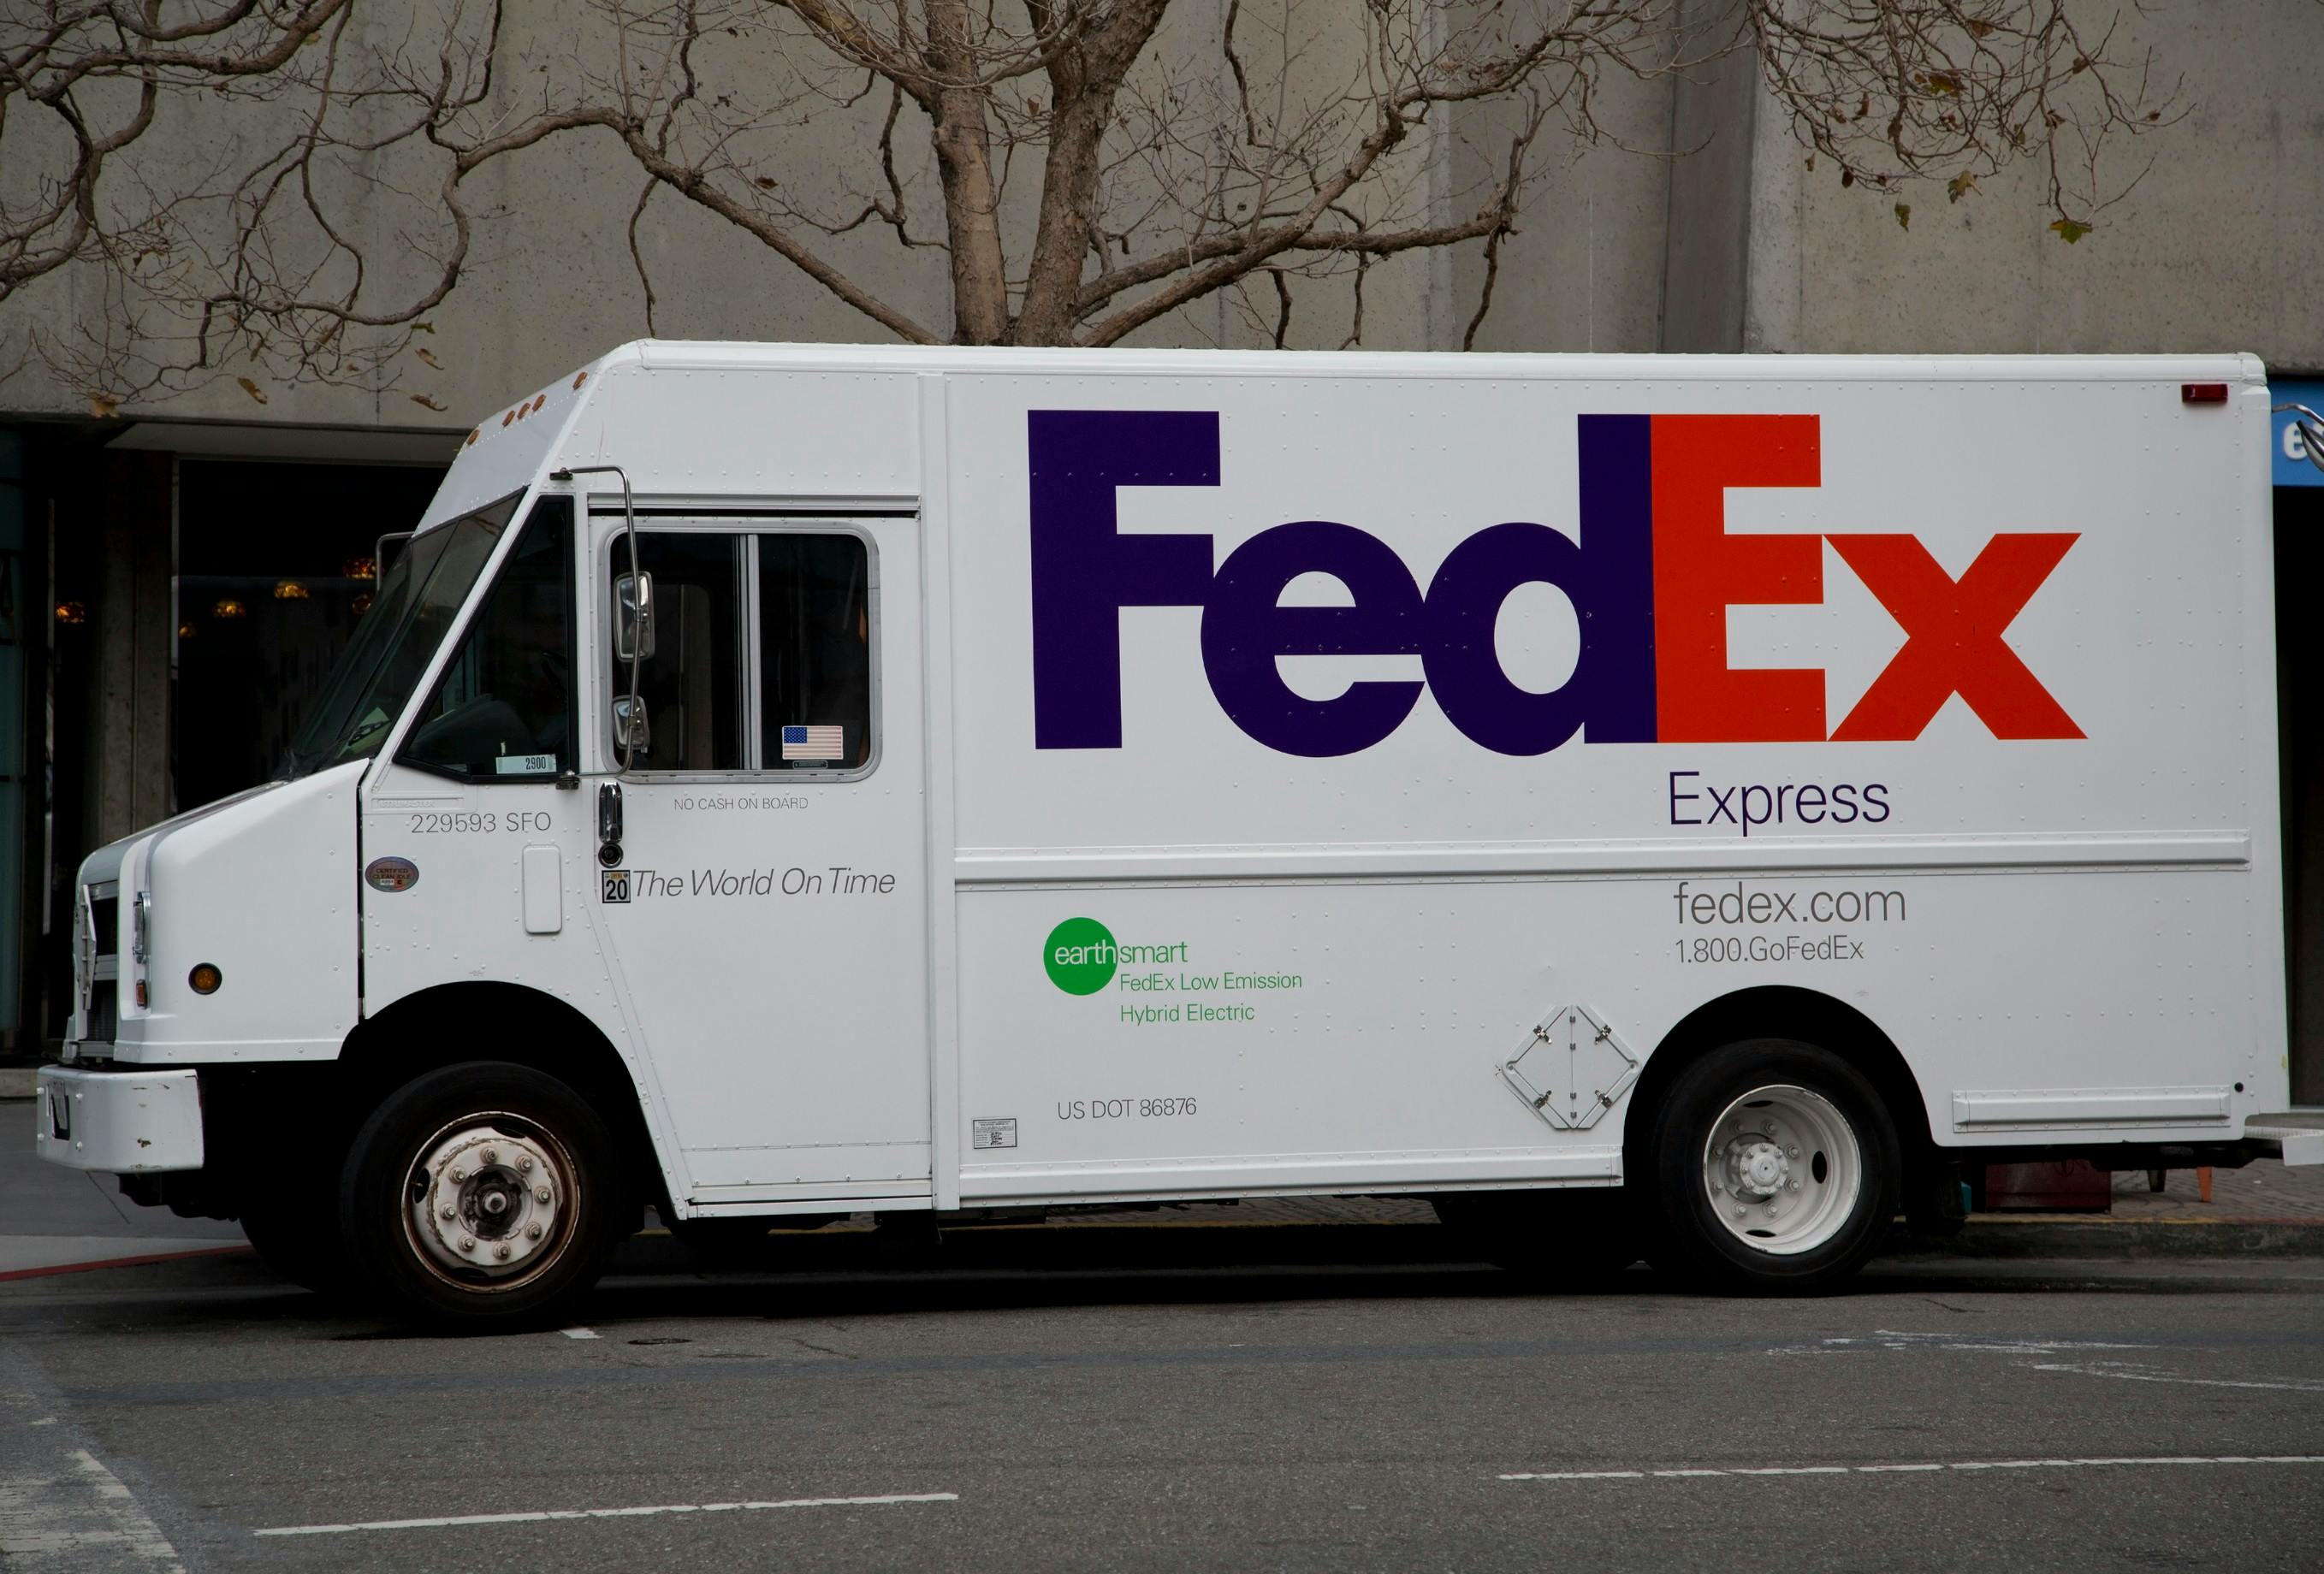 Fedex truck parked by a sidewalk